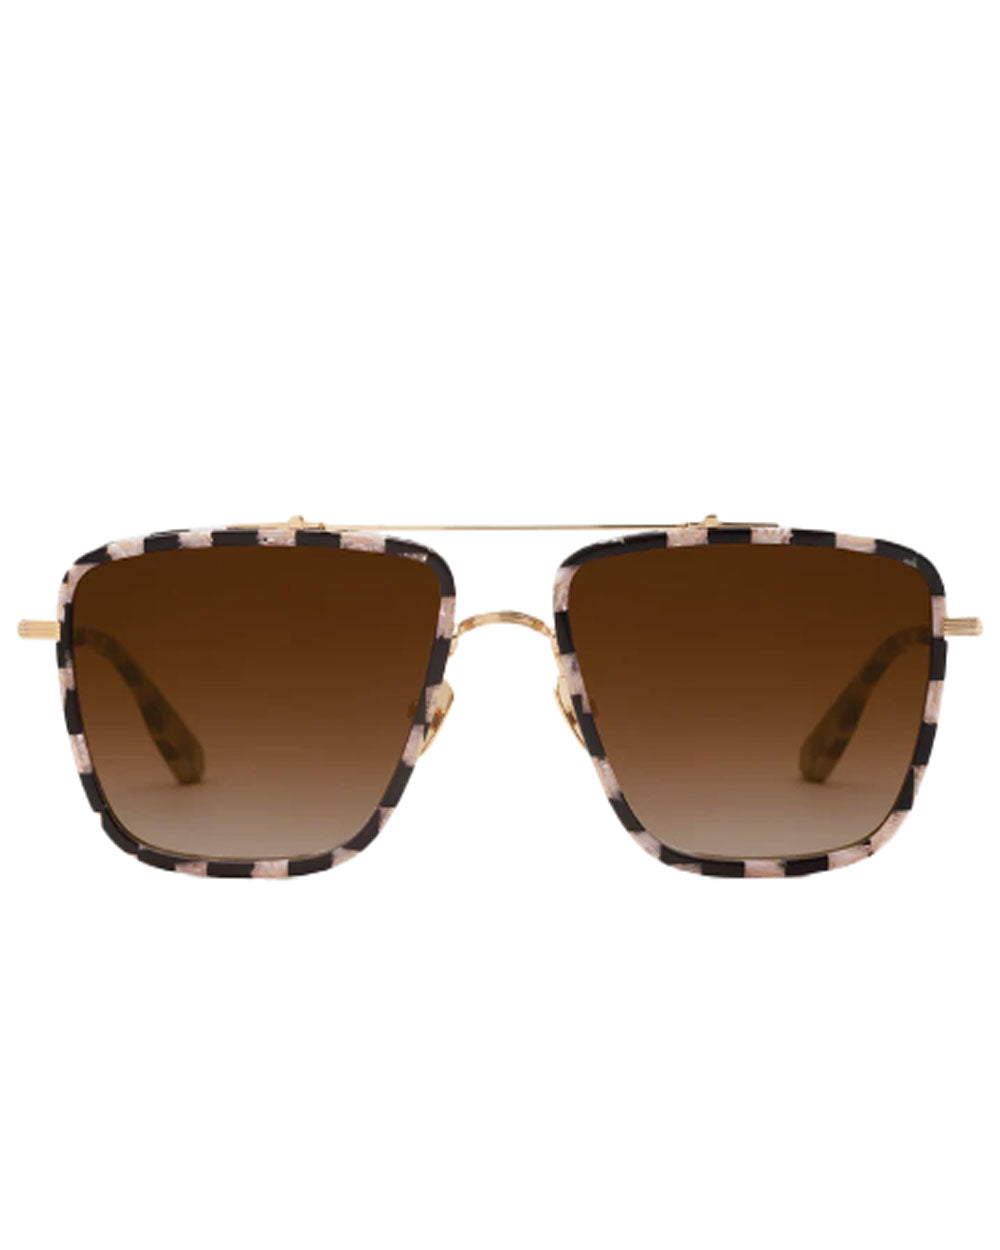 Vail Sunglasses in 18K Harlequin